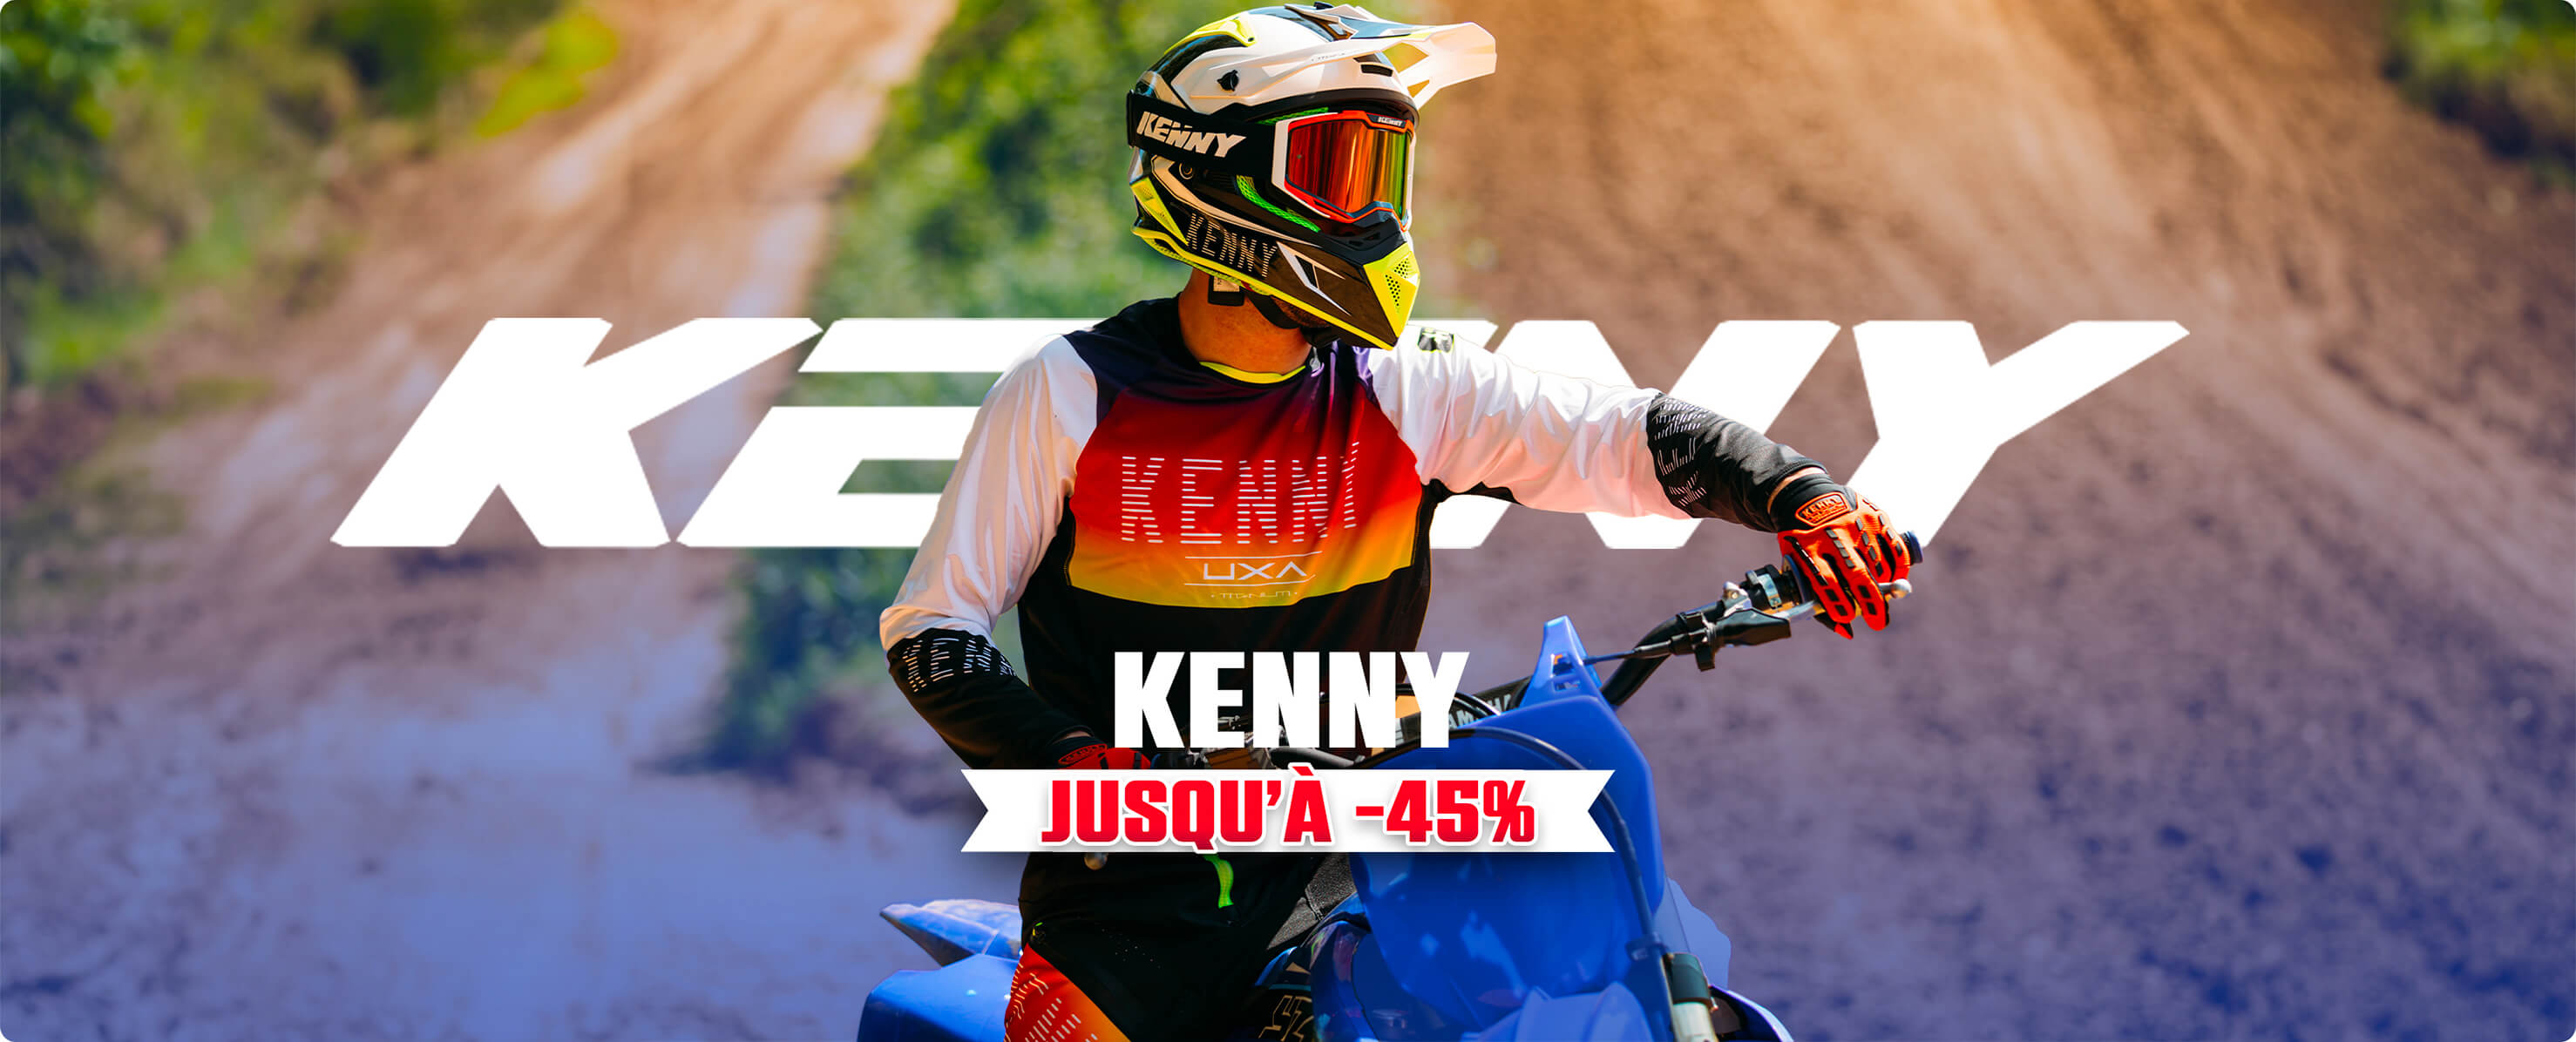 Kenny jusqu' -45%